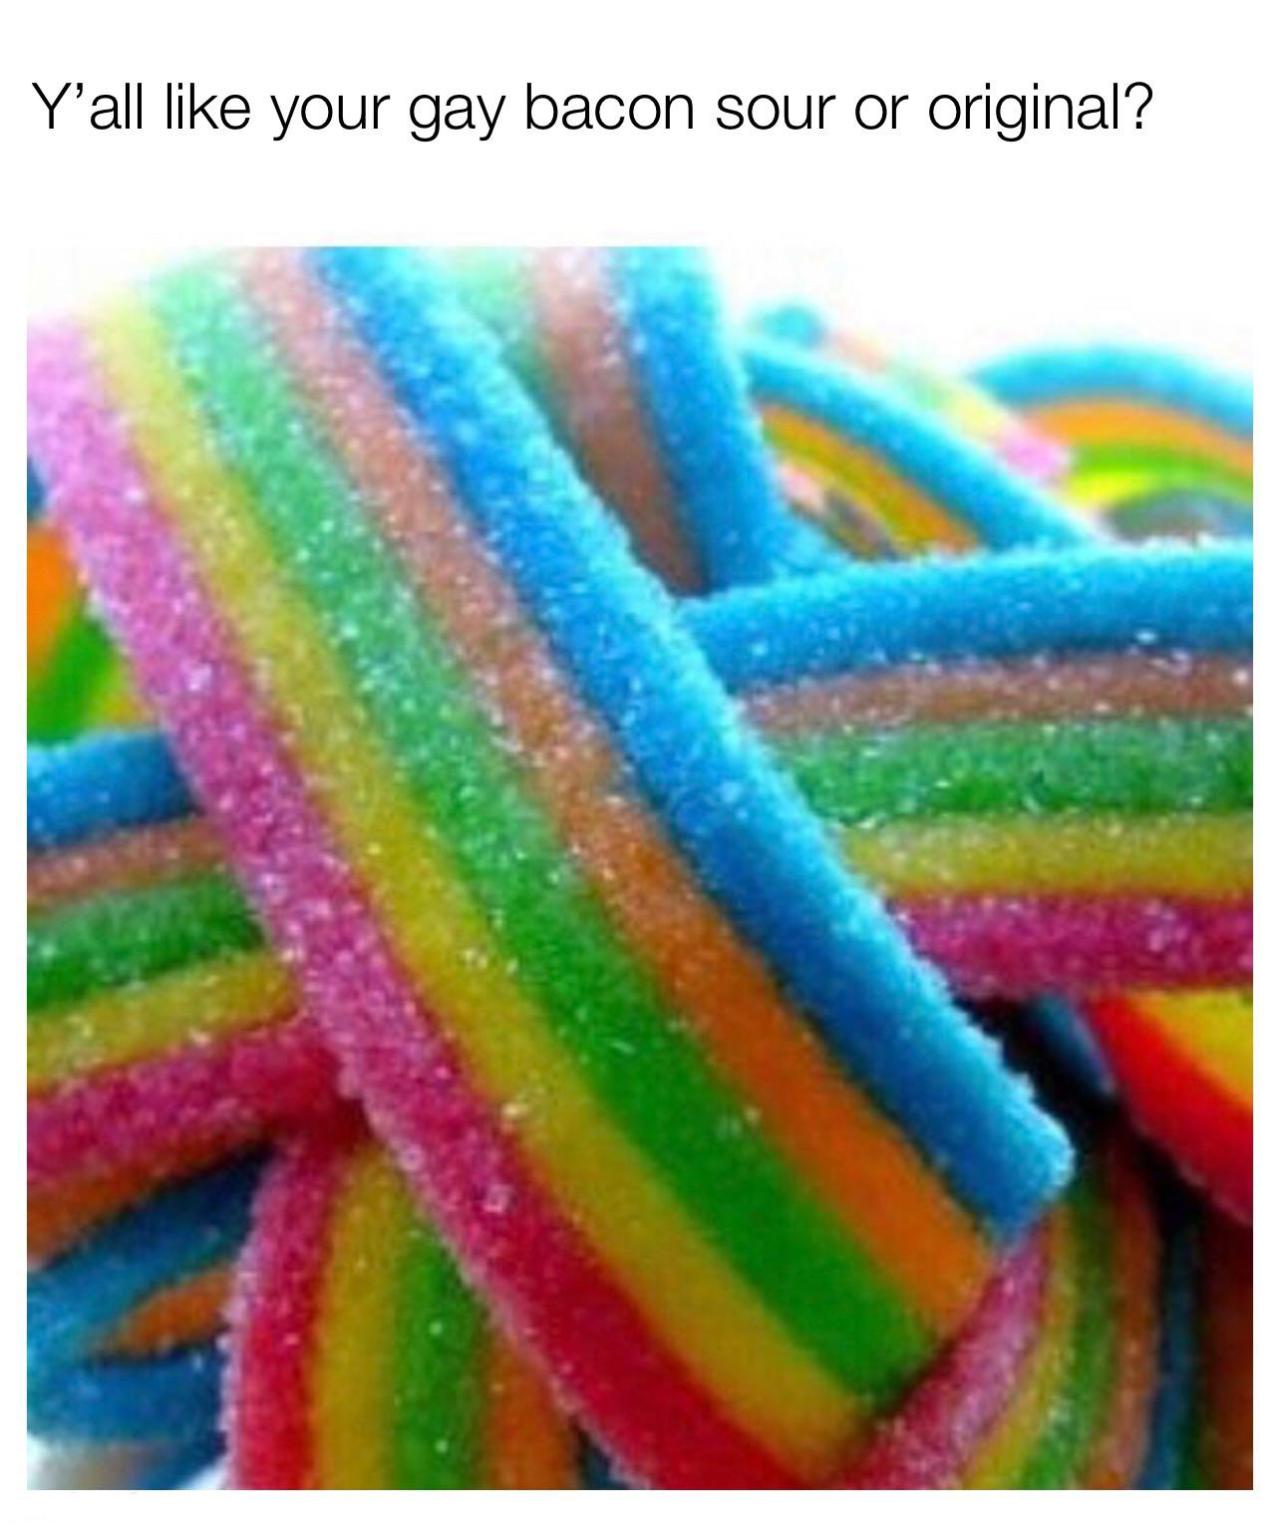 Sweet or sour #gay_irl#lgbt memes#funny#lgbt#lgbt community#lesbian memes